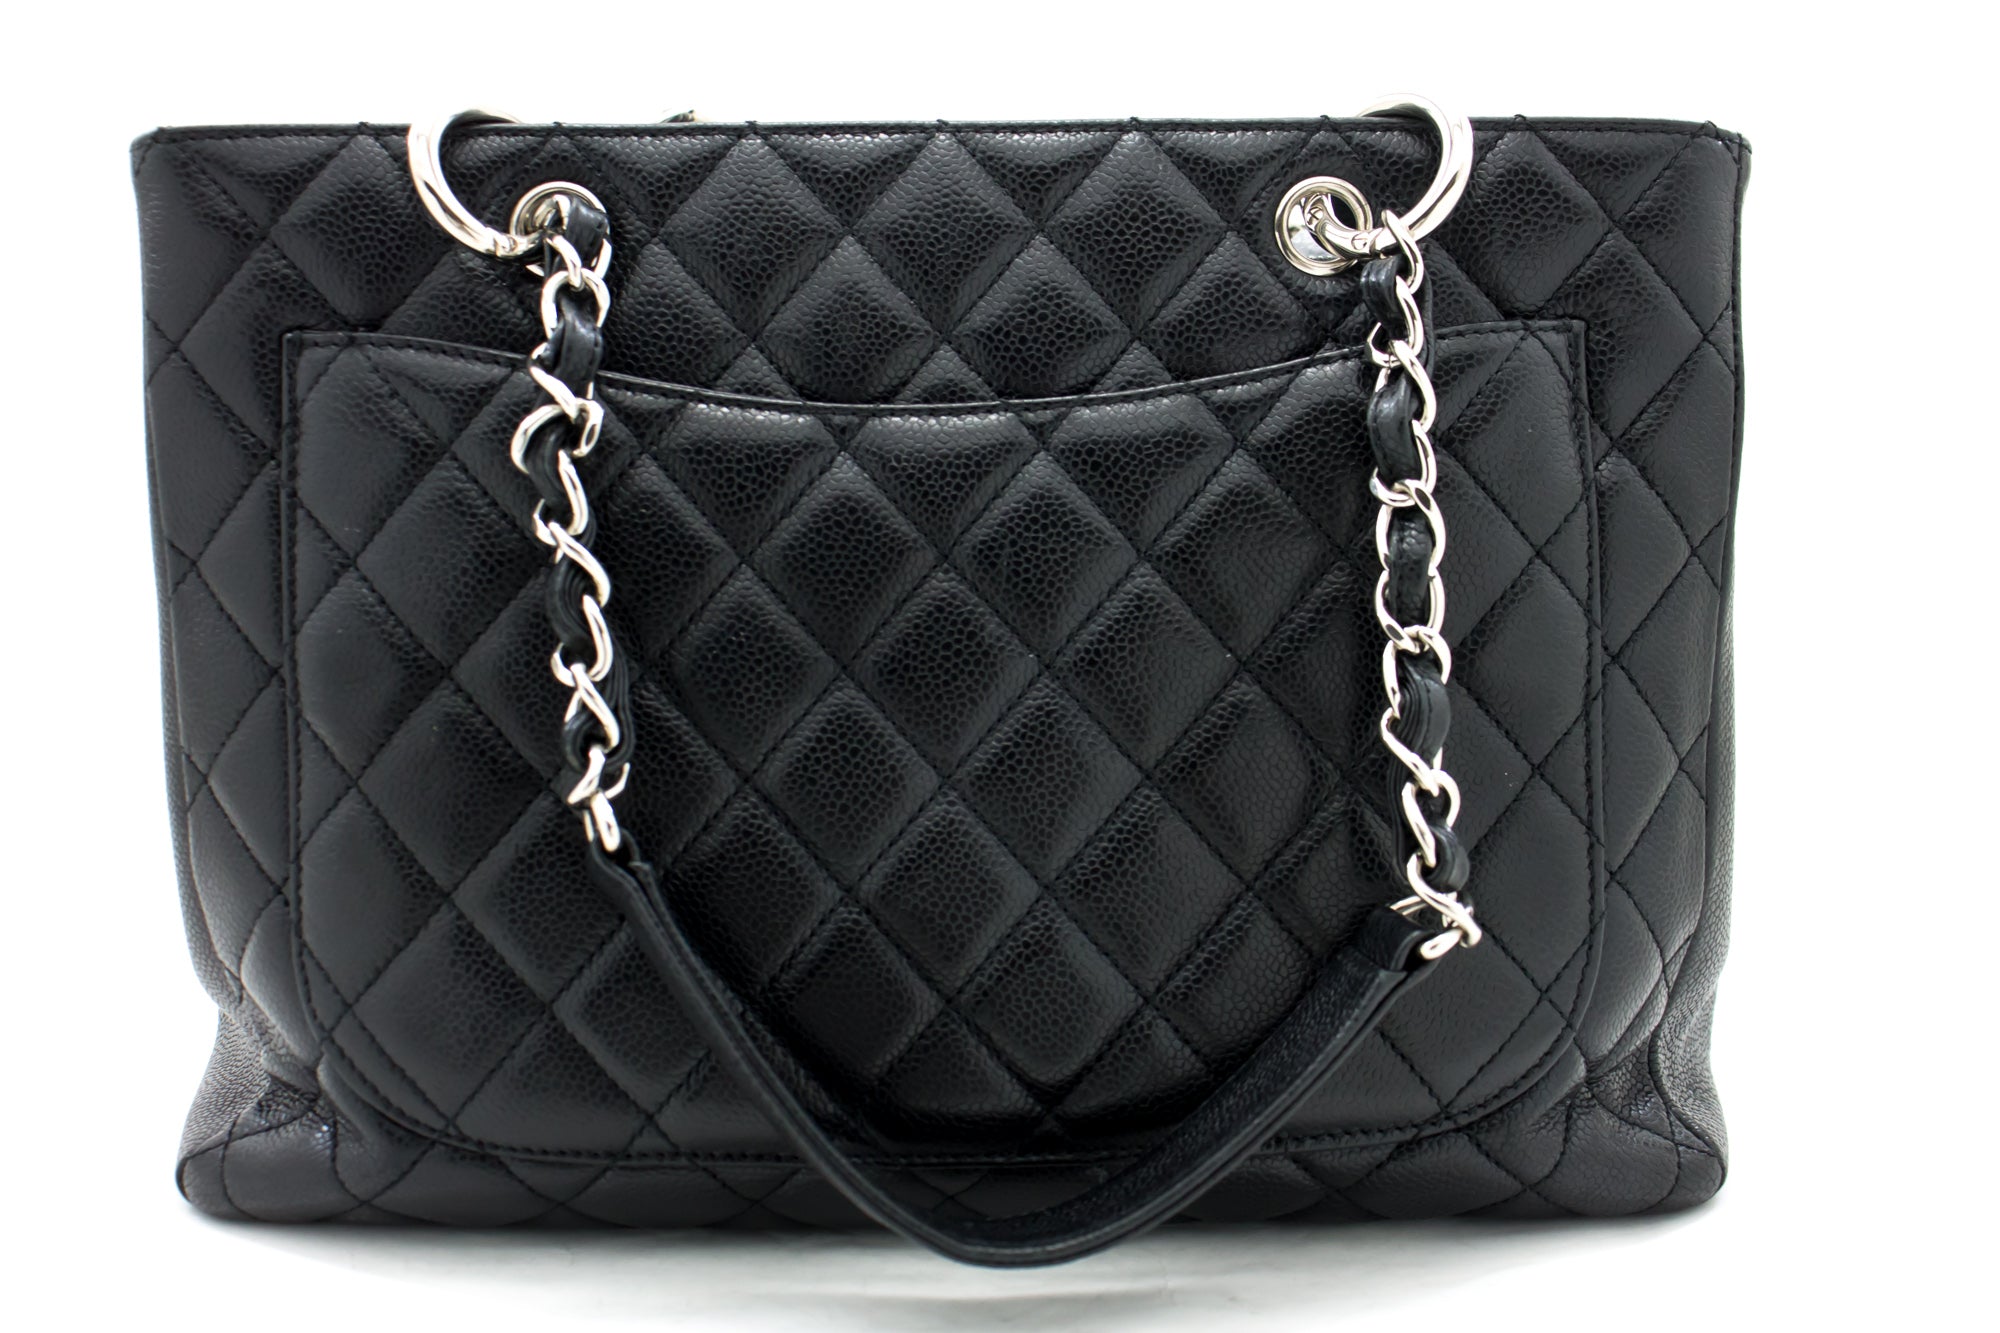 CHANEL Caviar GST 13 Grand Shopping Tote Chain Shoulder Bag Black